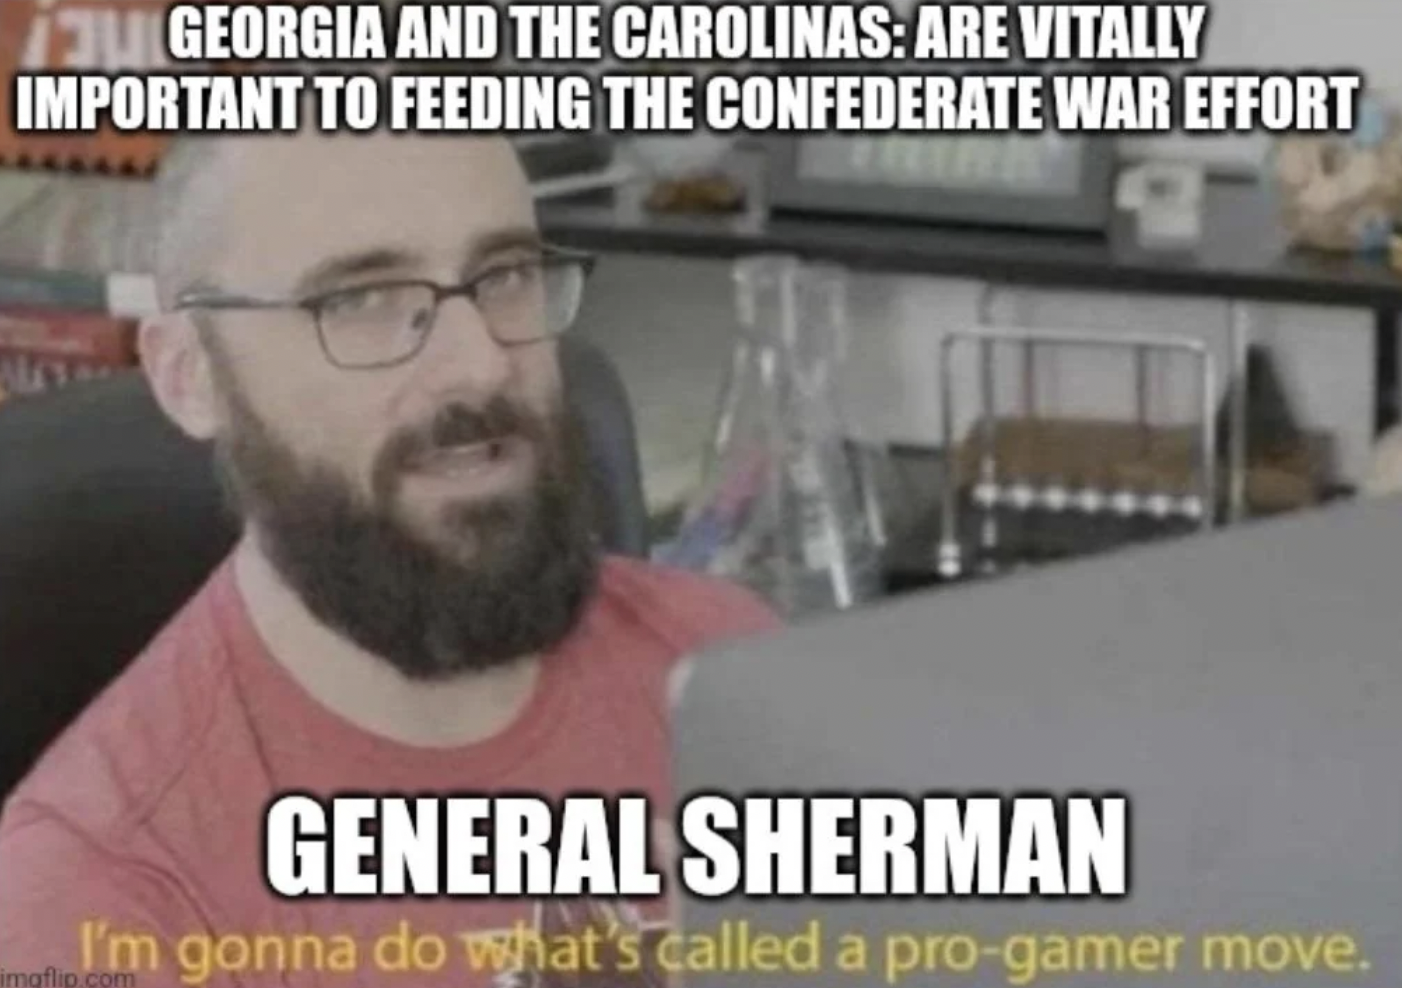 rocher de palmer - U Georgia And The Carolinas Are Vitally Important To Feeding The Confederate War Effort General Sherman I'm gonna do what's called a progamer move. mgflip.com